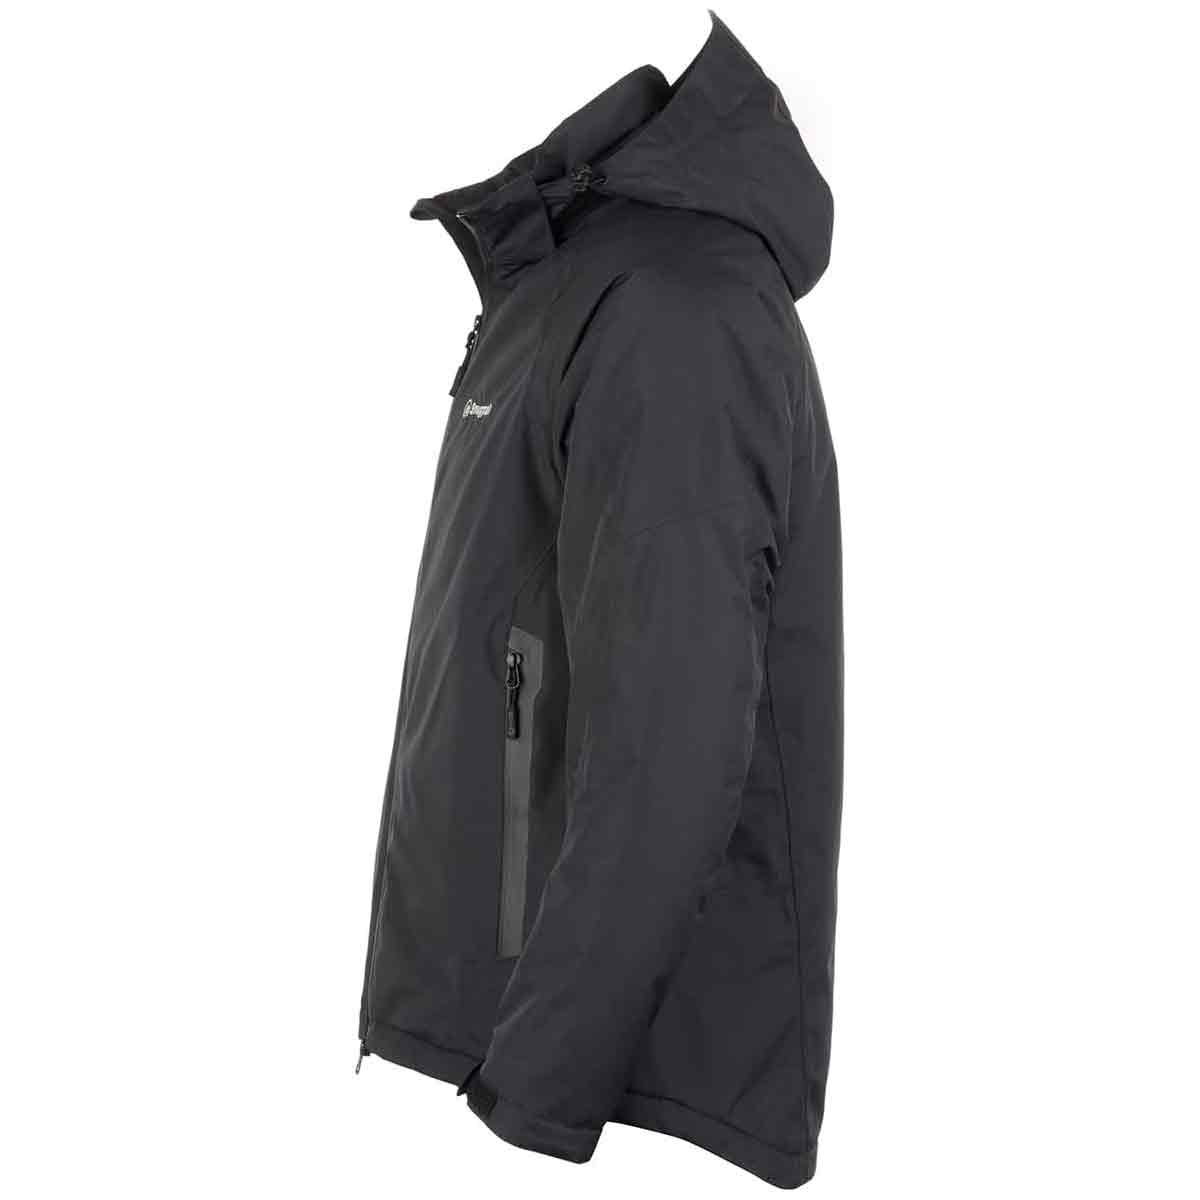 Snugpak Torrent Waterproof Insulated Black Jacket - John Bull Clothing